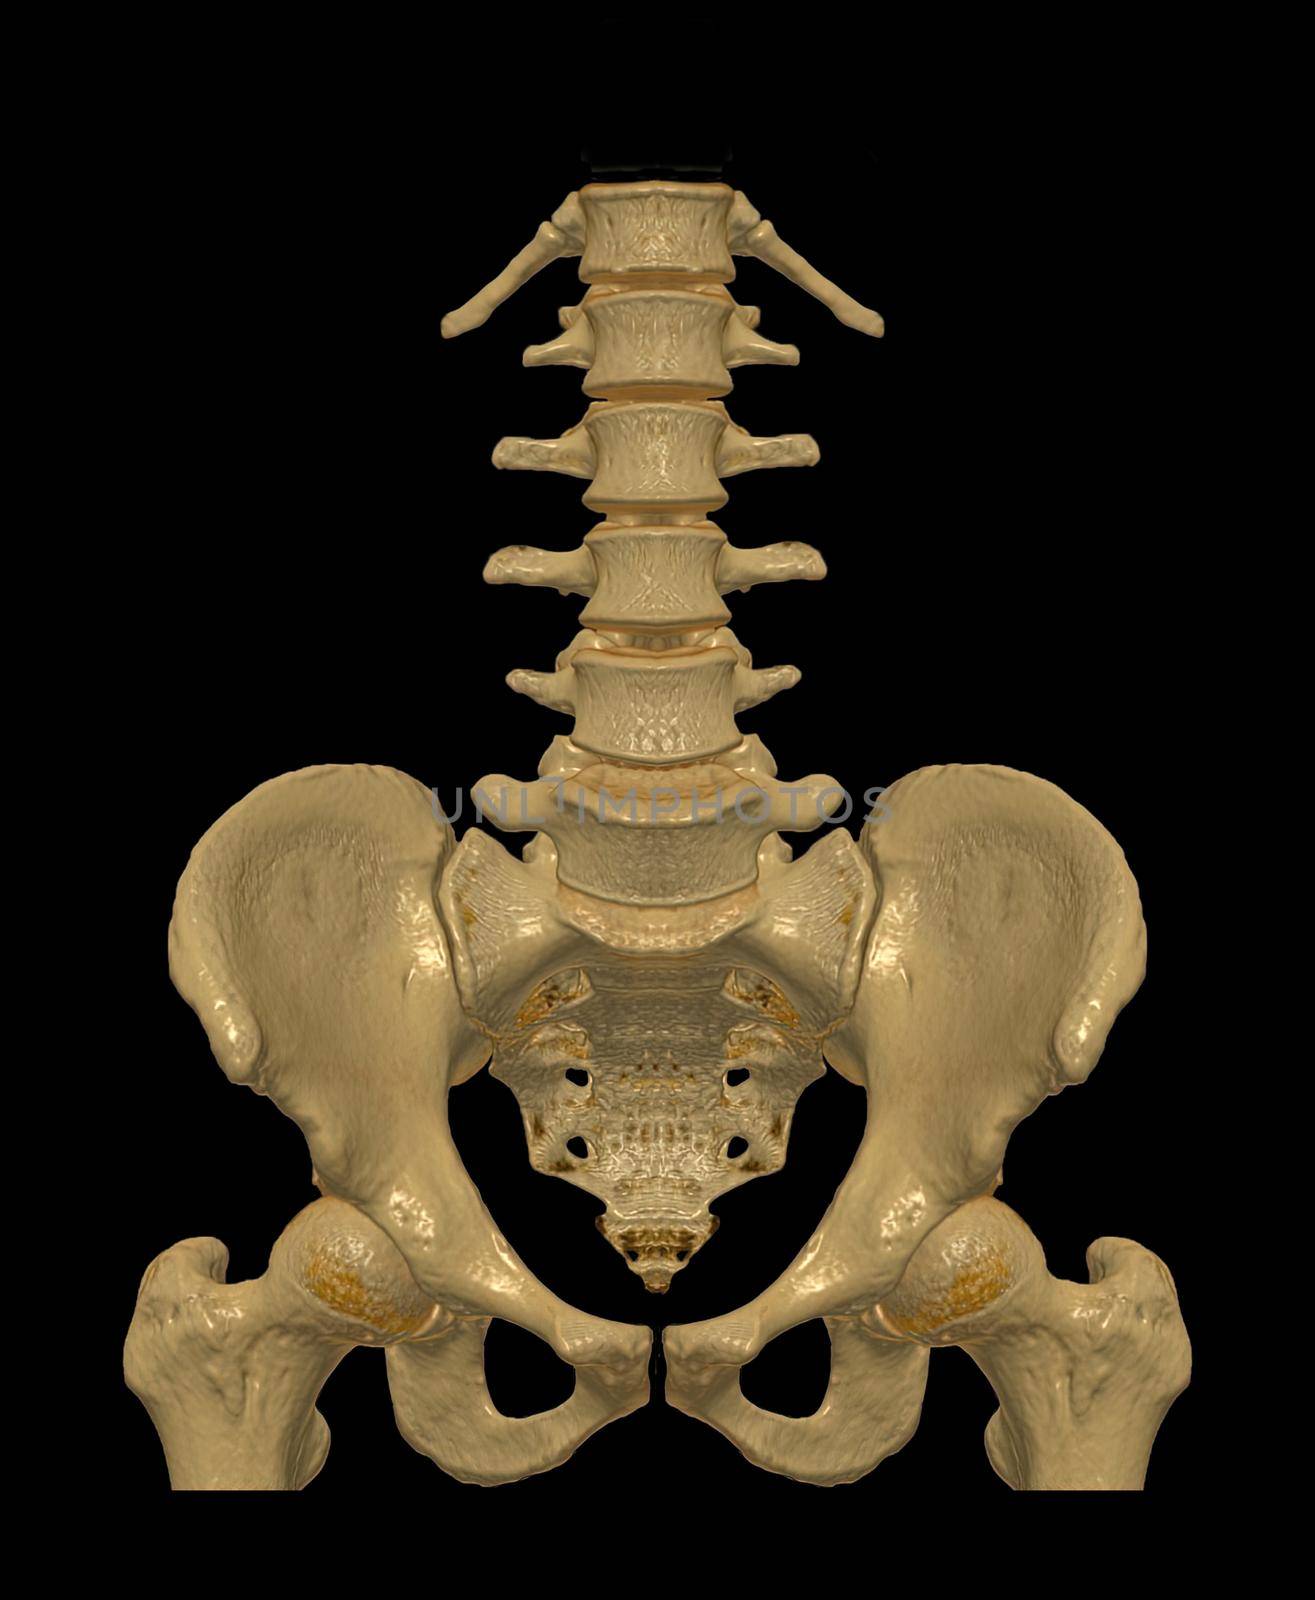 CT Lumbar spine or L-S spine 3D rendering image Front view . 3D illustration. by samunella